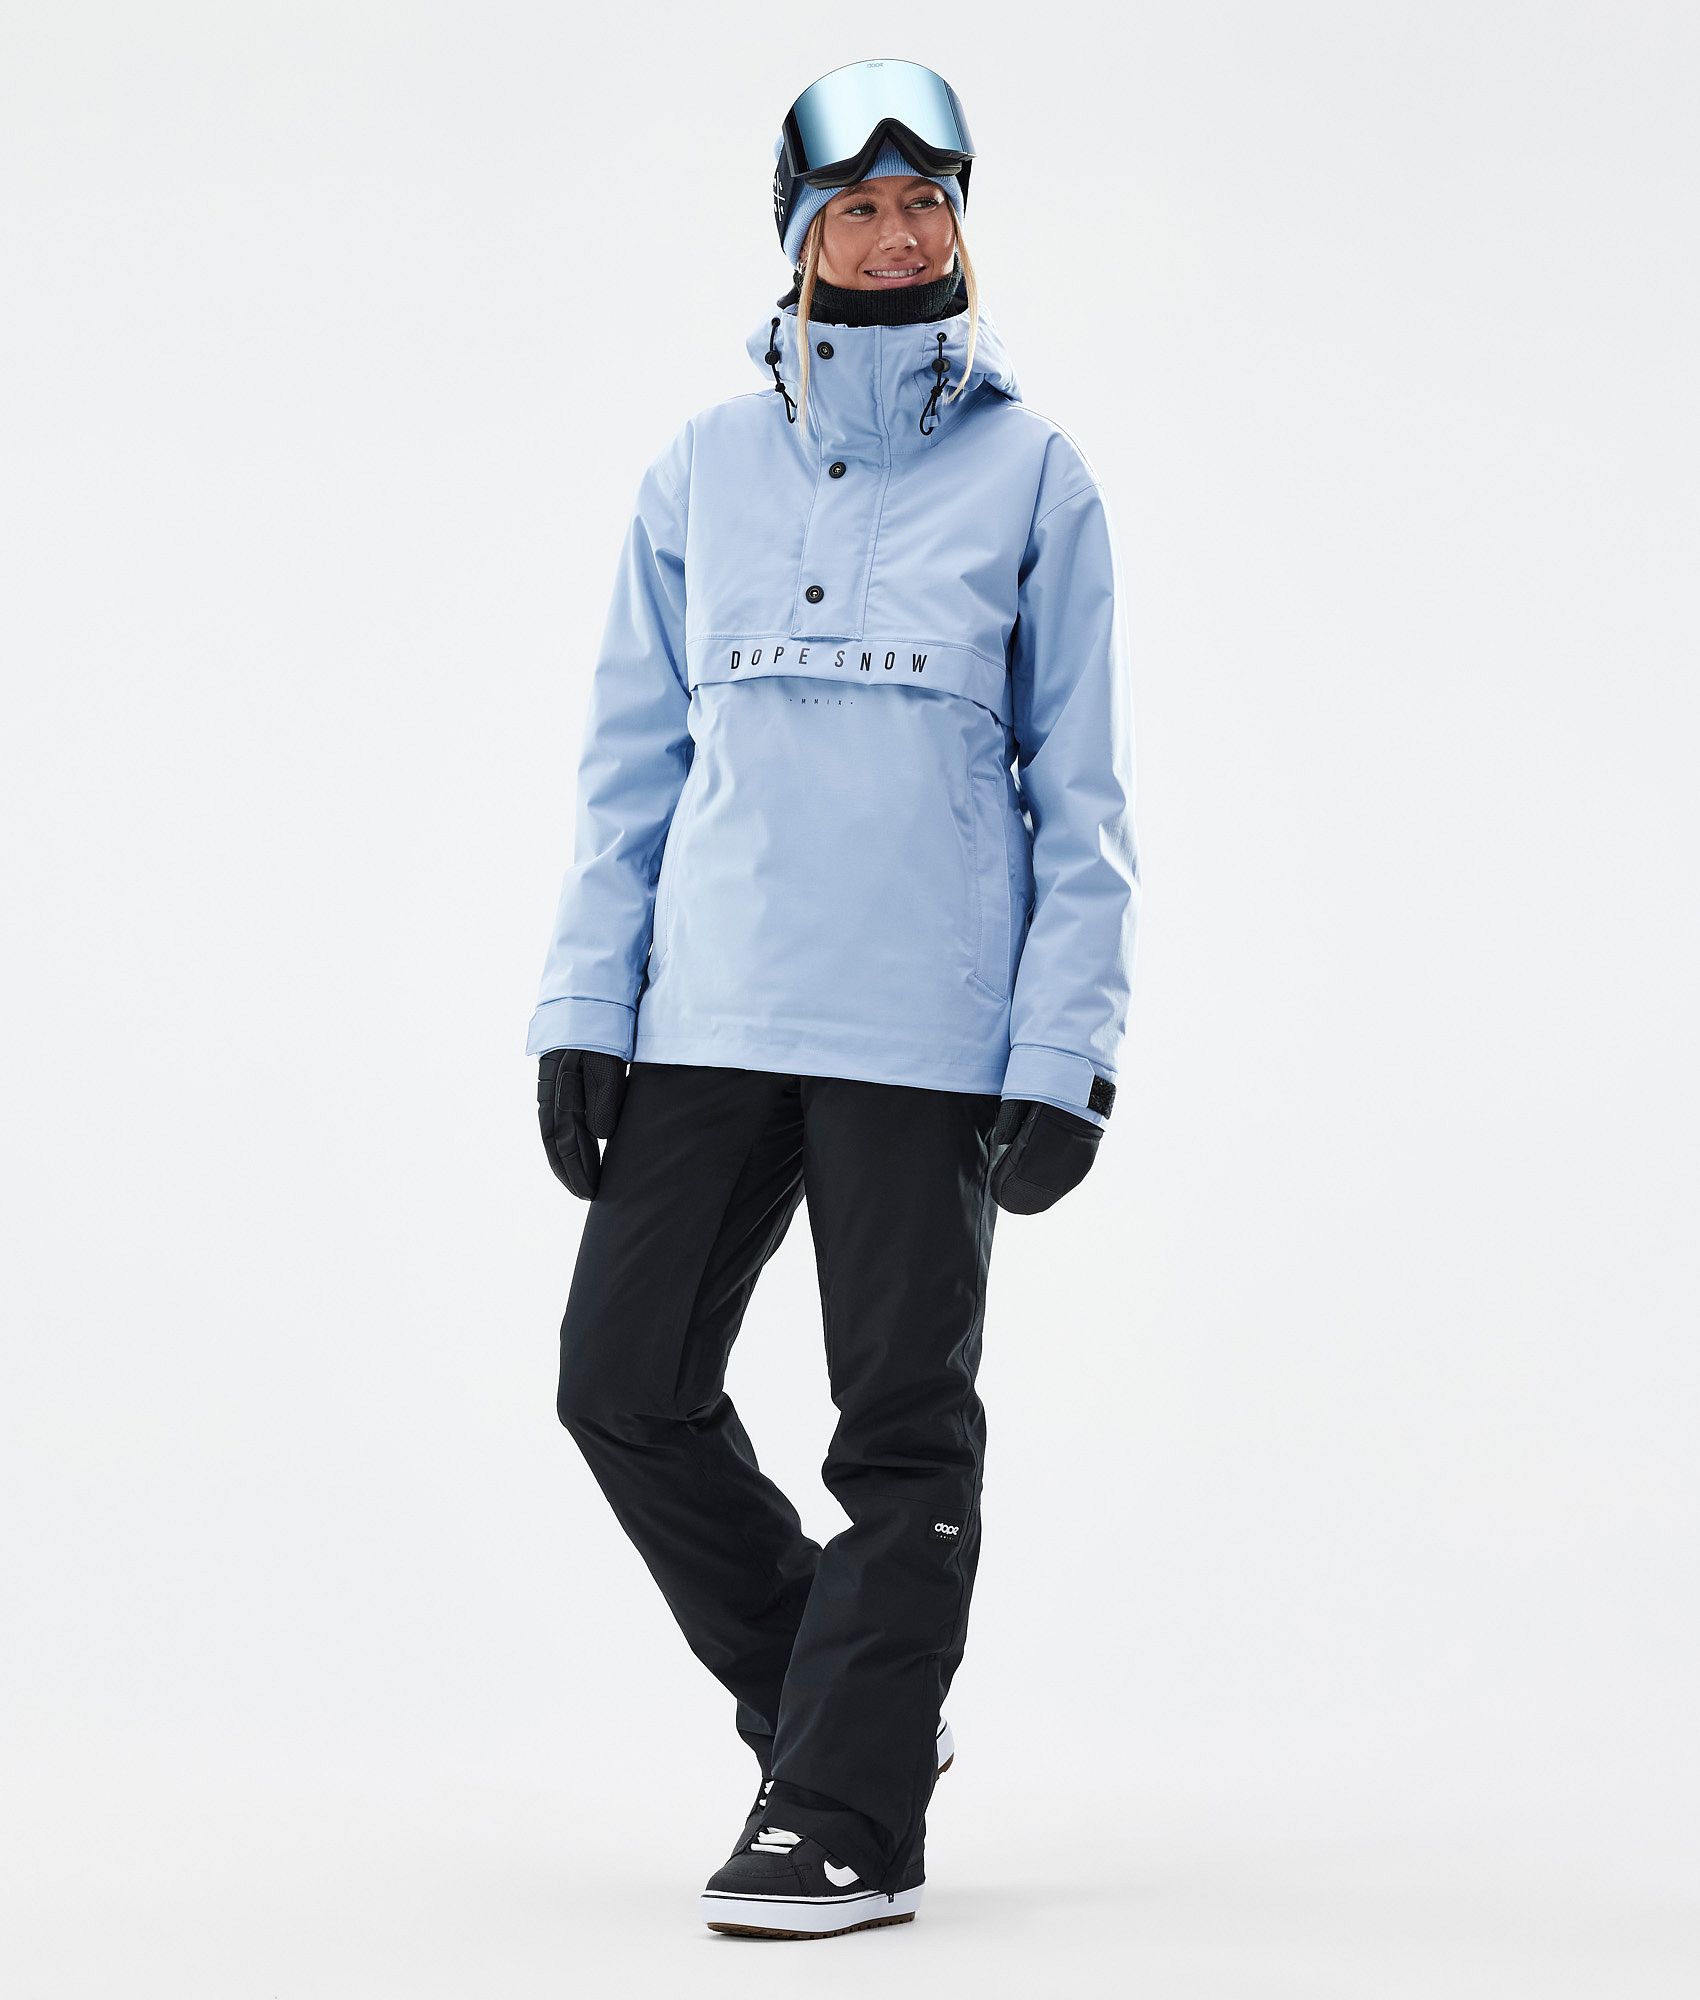 Women's light winter jackets - Stilettoshop.eu online store